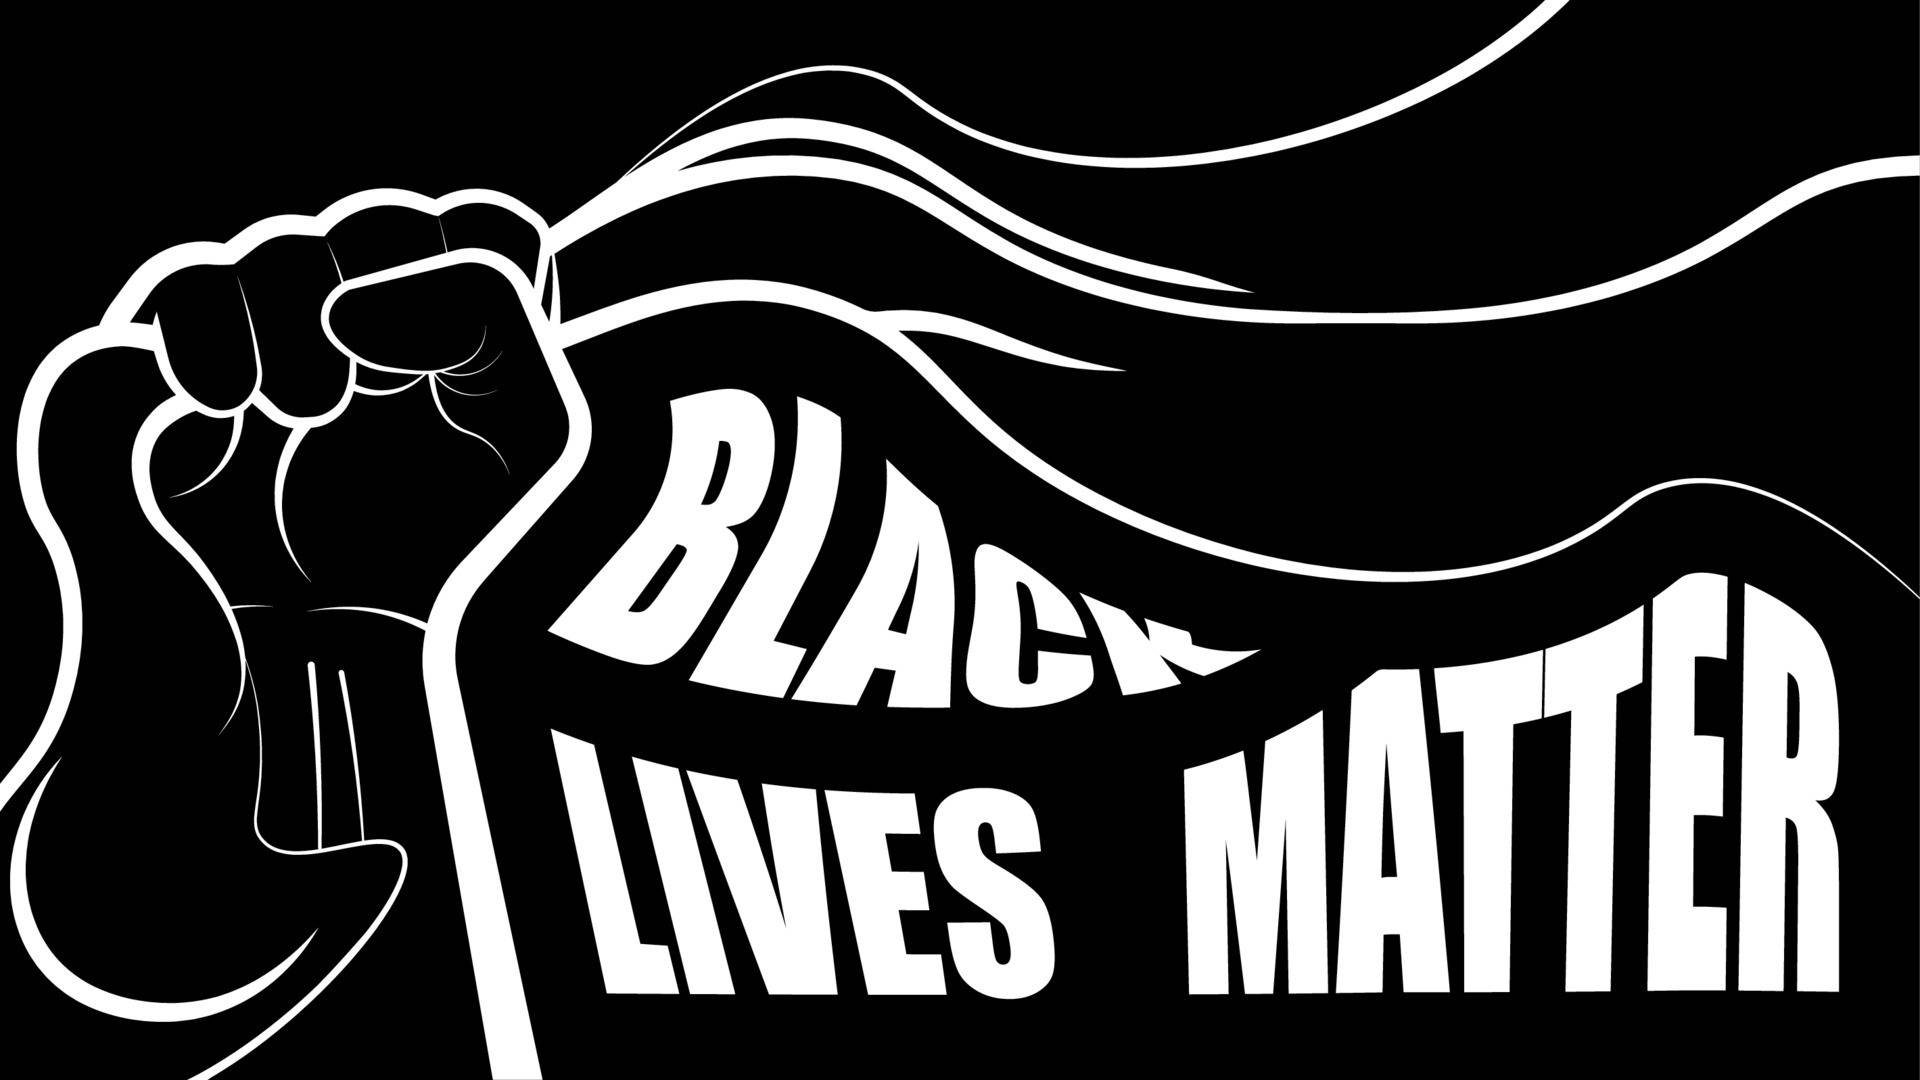 Black Lives Matter Banner Wallpaper